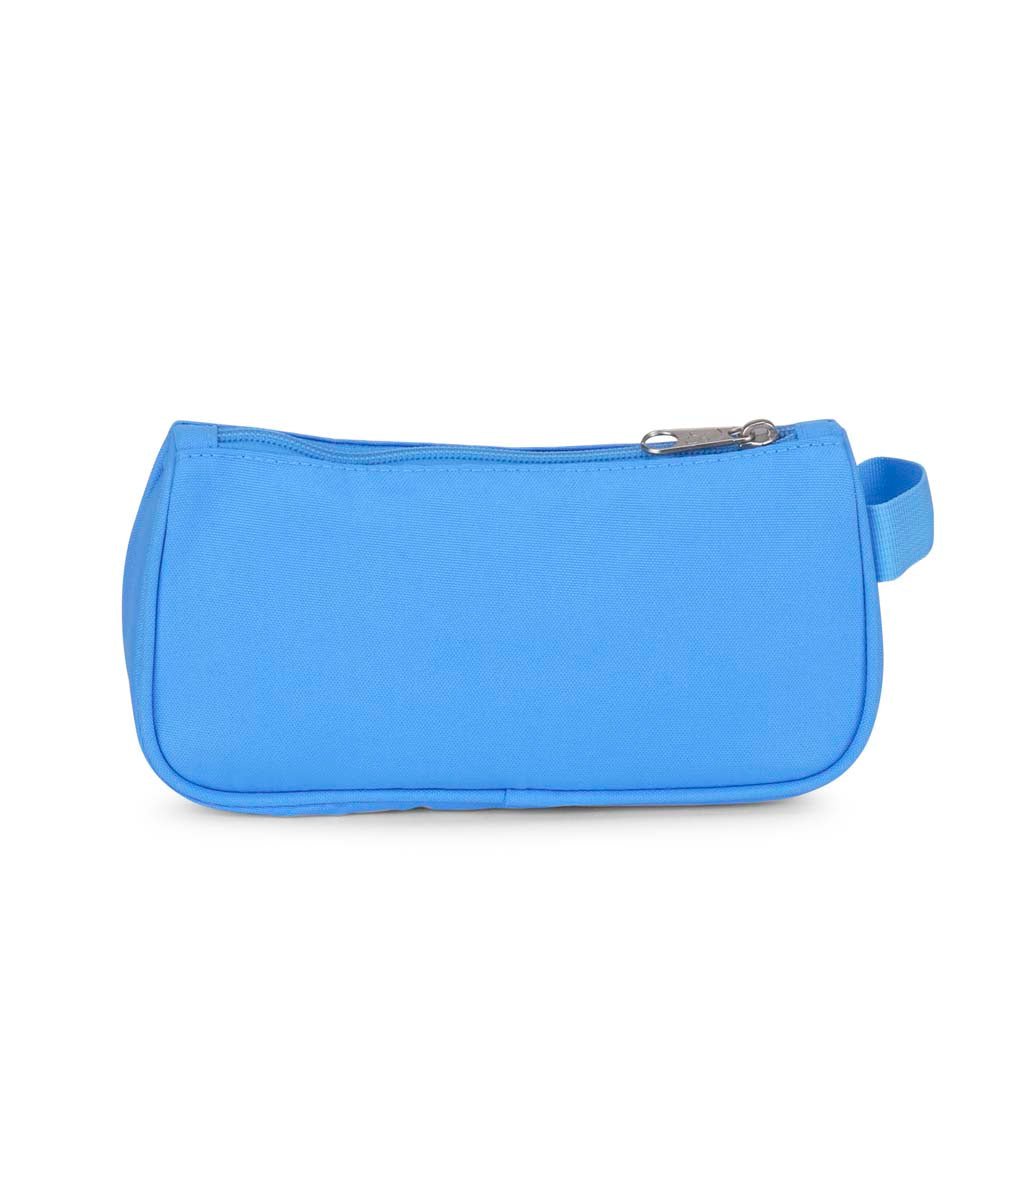 JanSport Medium Accessory Pouch - Blue Neon